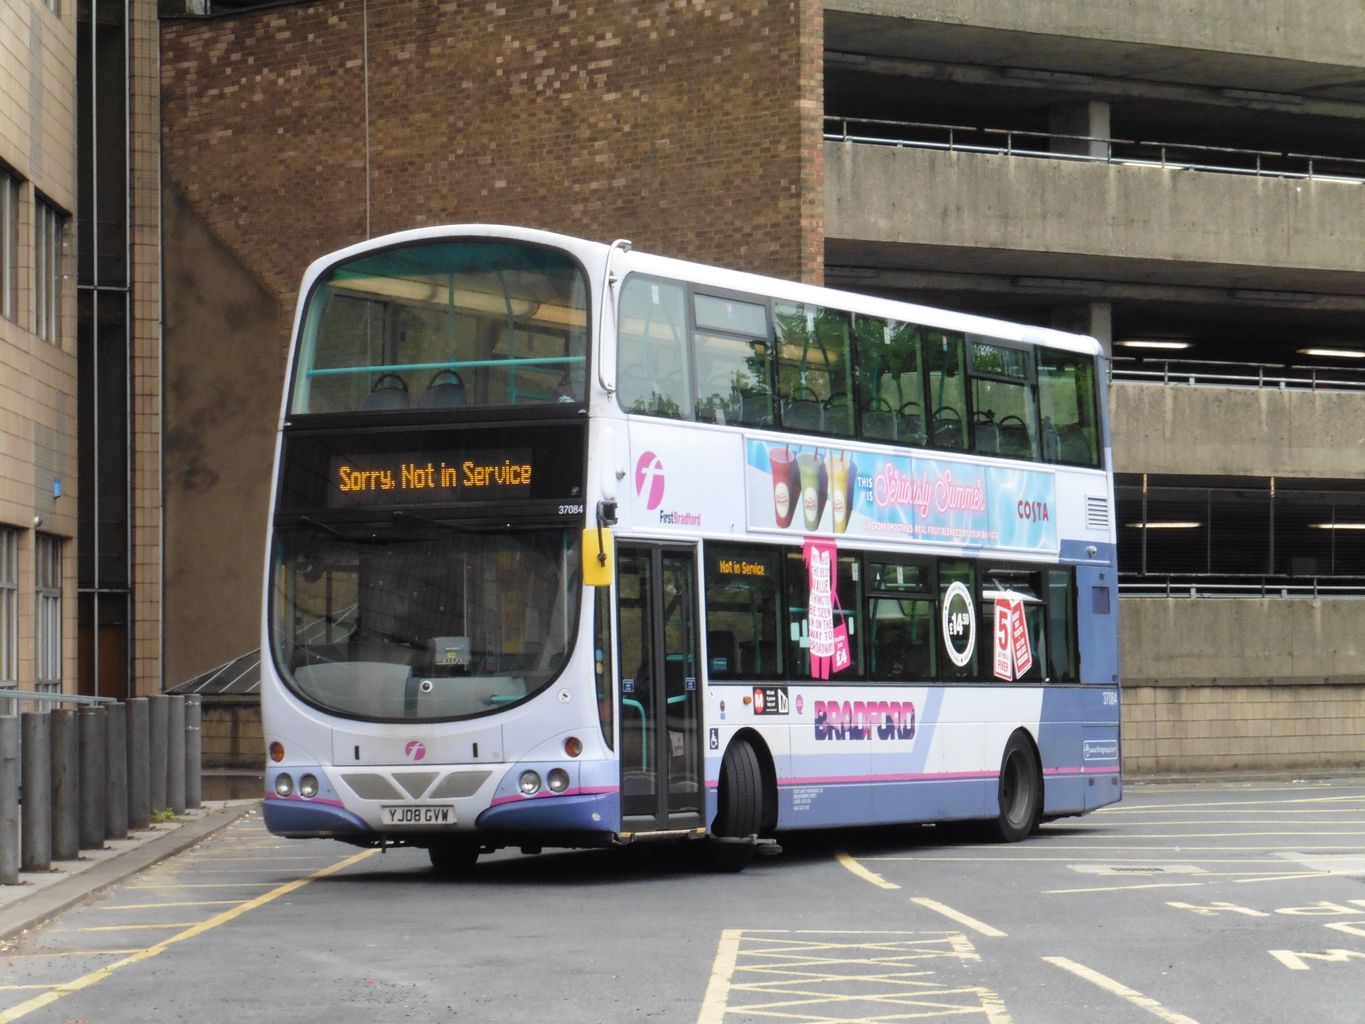 Major changes to Bradford City Centre transport